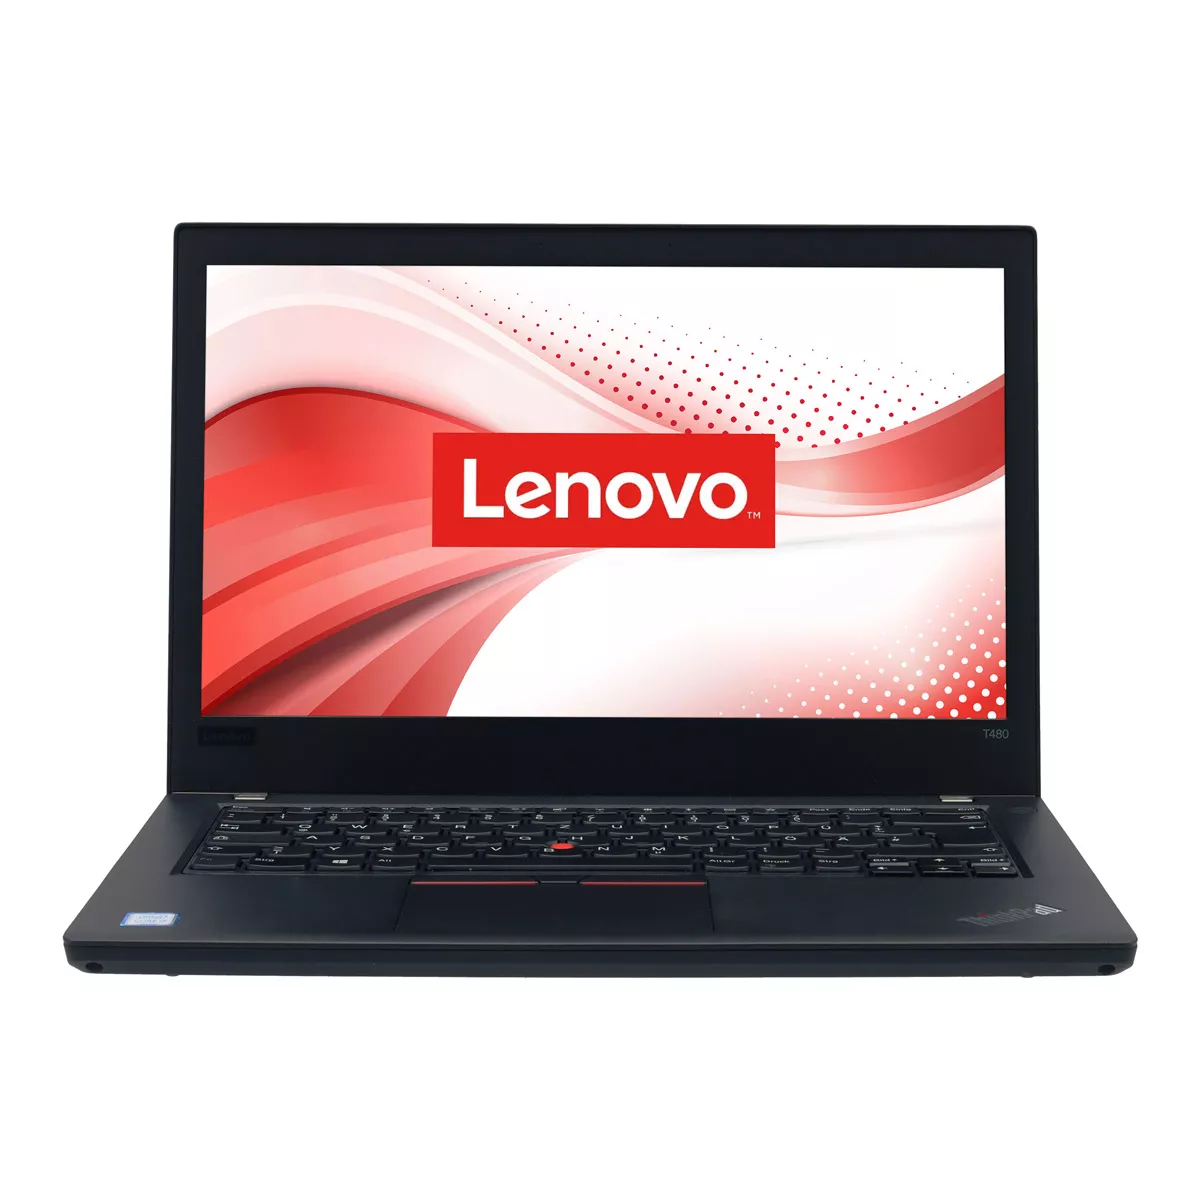 Lenovo ThinkPad T480 Core i7 8550U Full-HD 16 GB 500 GB M.2 SSD Webcam A+